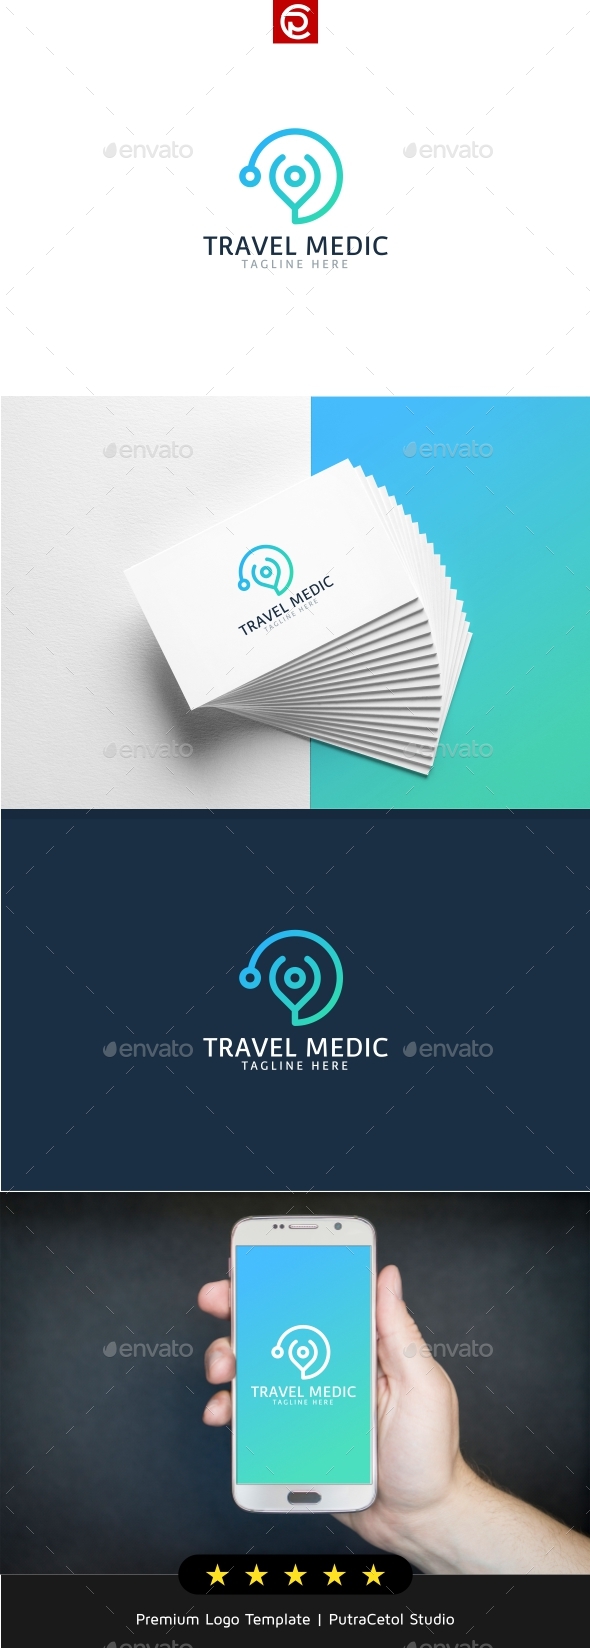 Medical Travel Logo